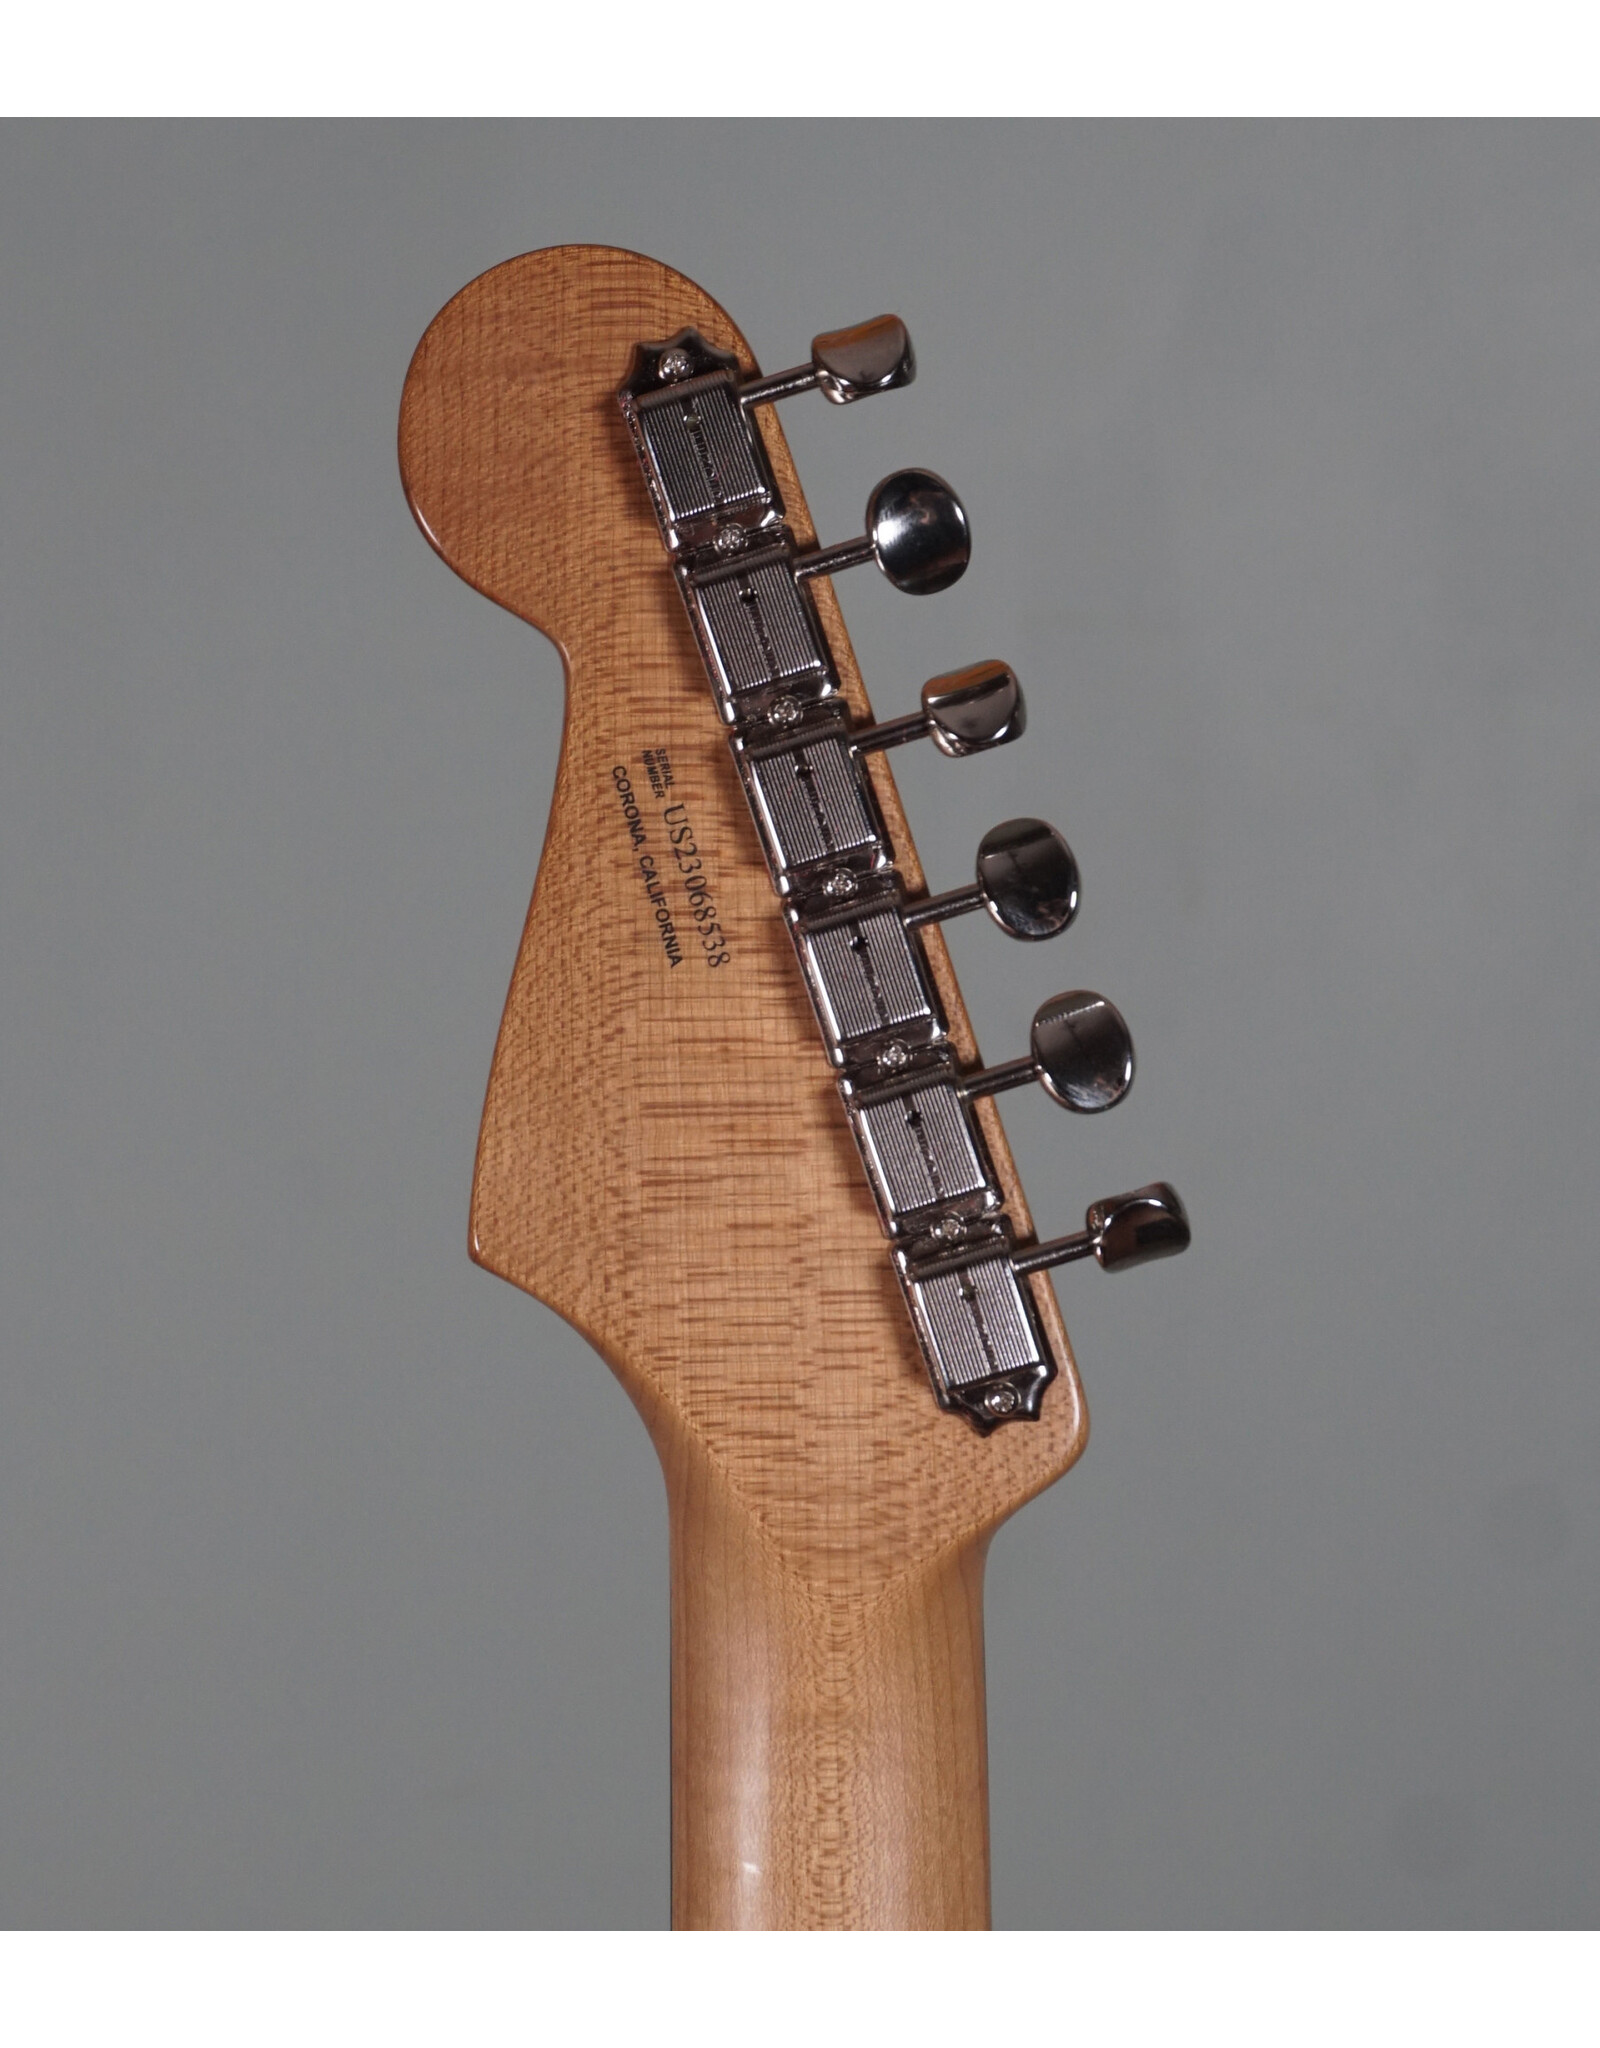 Fender Fender Limited Edition Suona Stratocaster Thinline, Ebony Fingerboard, Violin Burst w/ Deluxe Blonde HSC